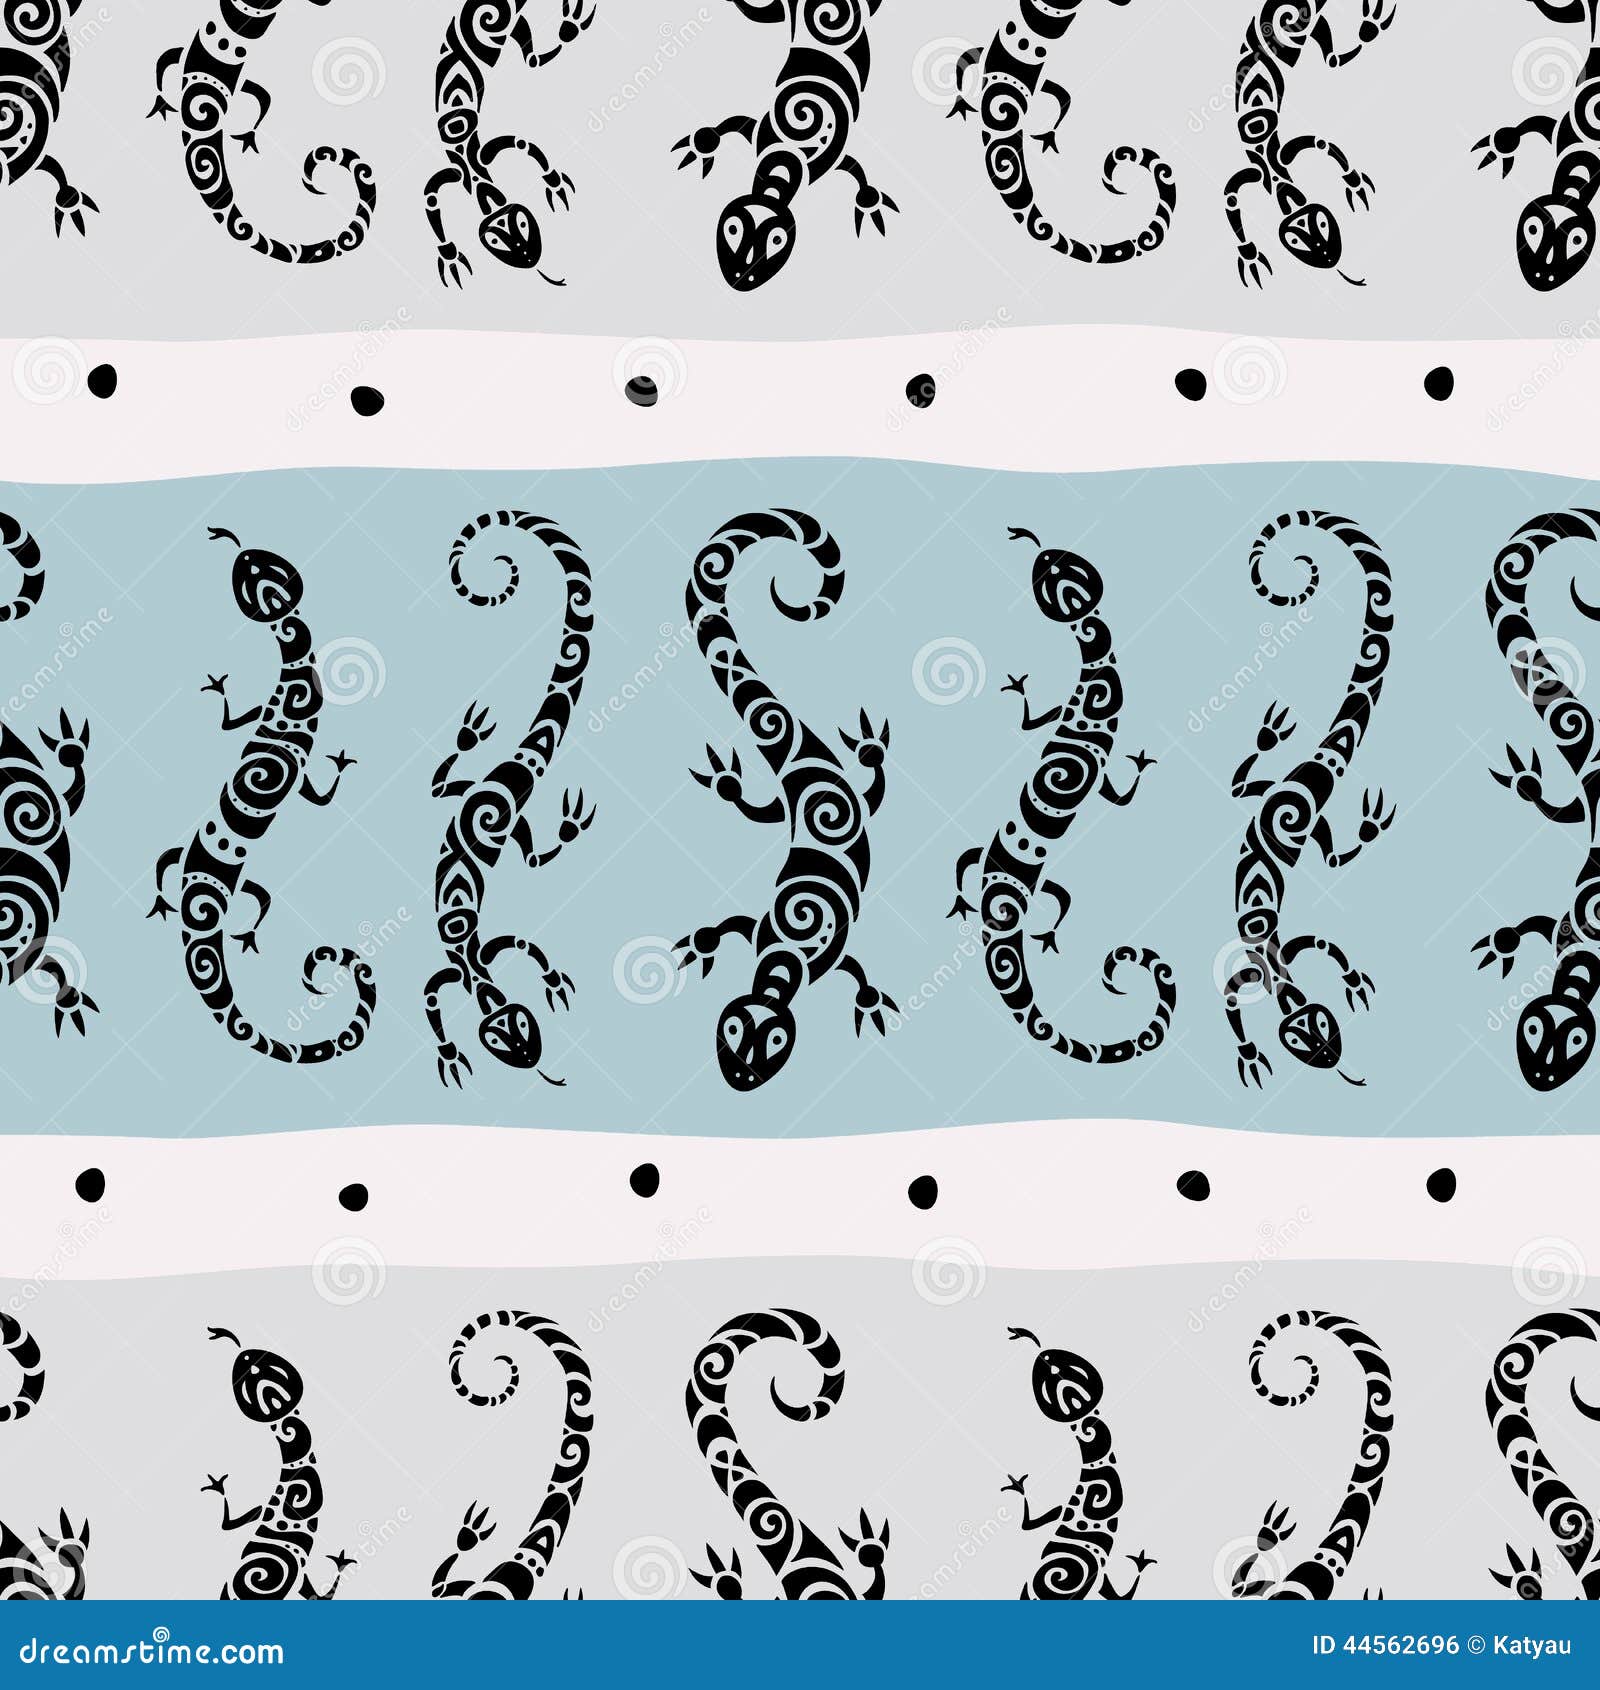 lizards. seamless pattern.